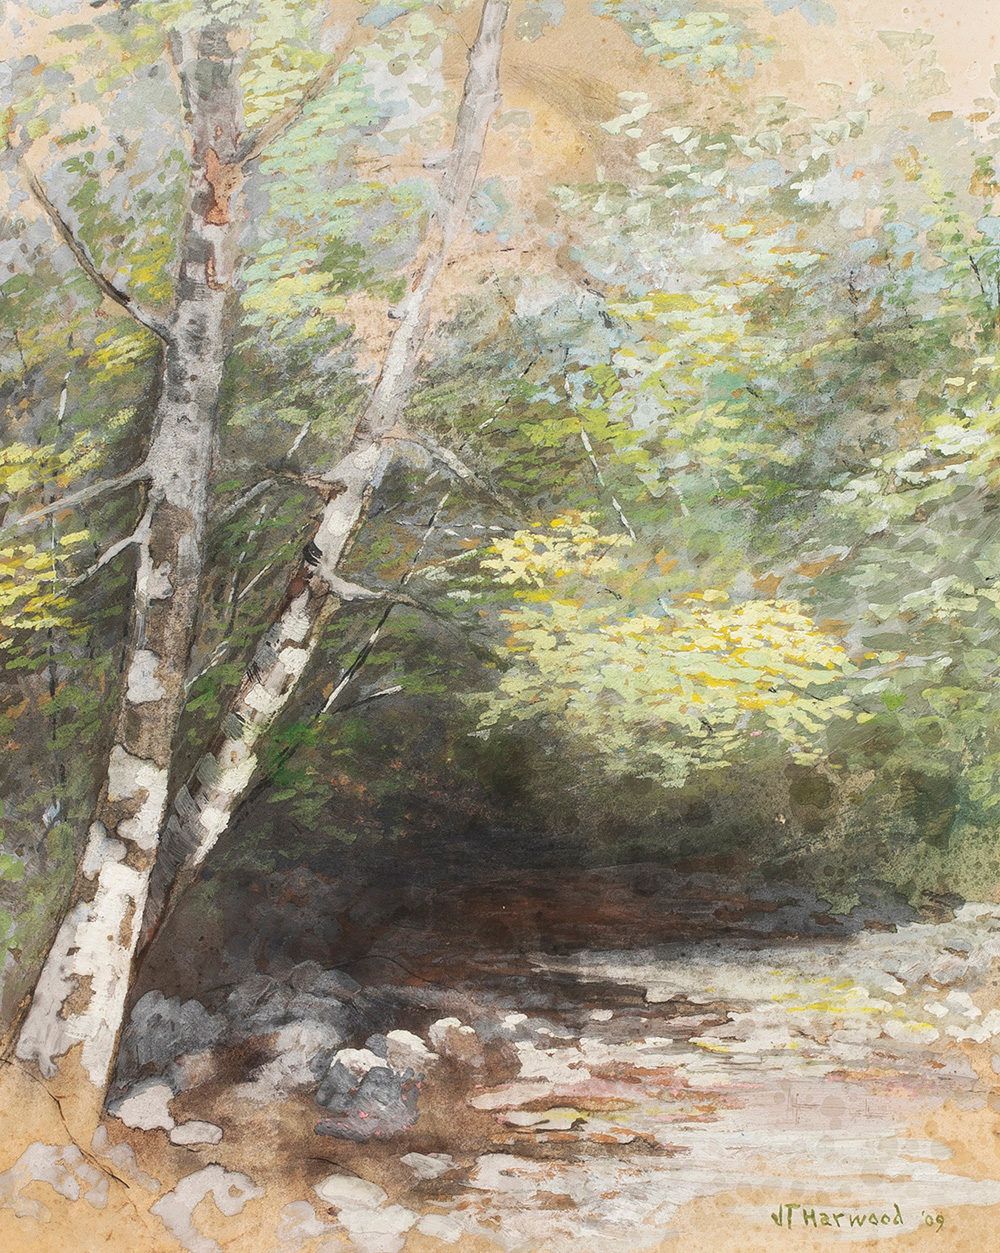 James Taylor Harwood (American, 1860–1940), Birch by a Stream (Utah), 1909, watercolor, 15.5″ x 13.5″.